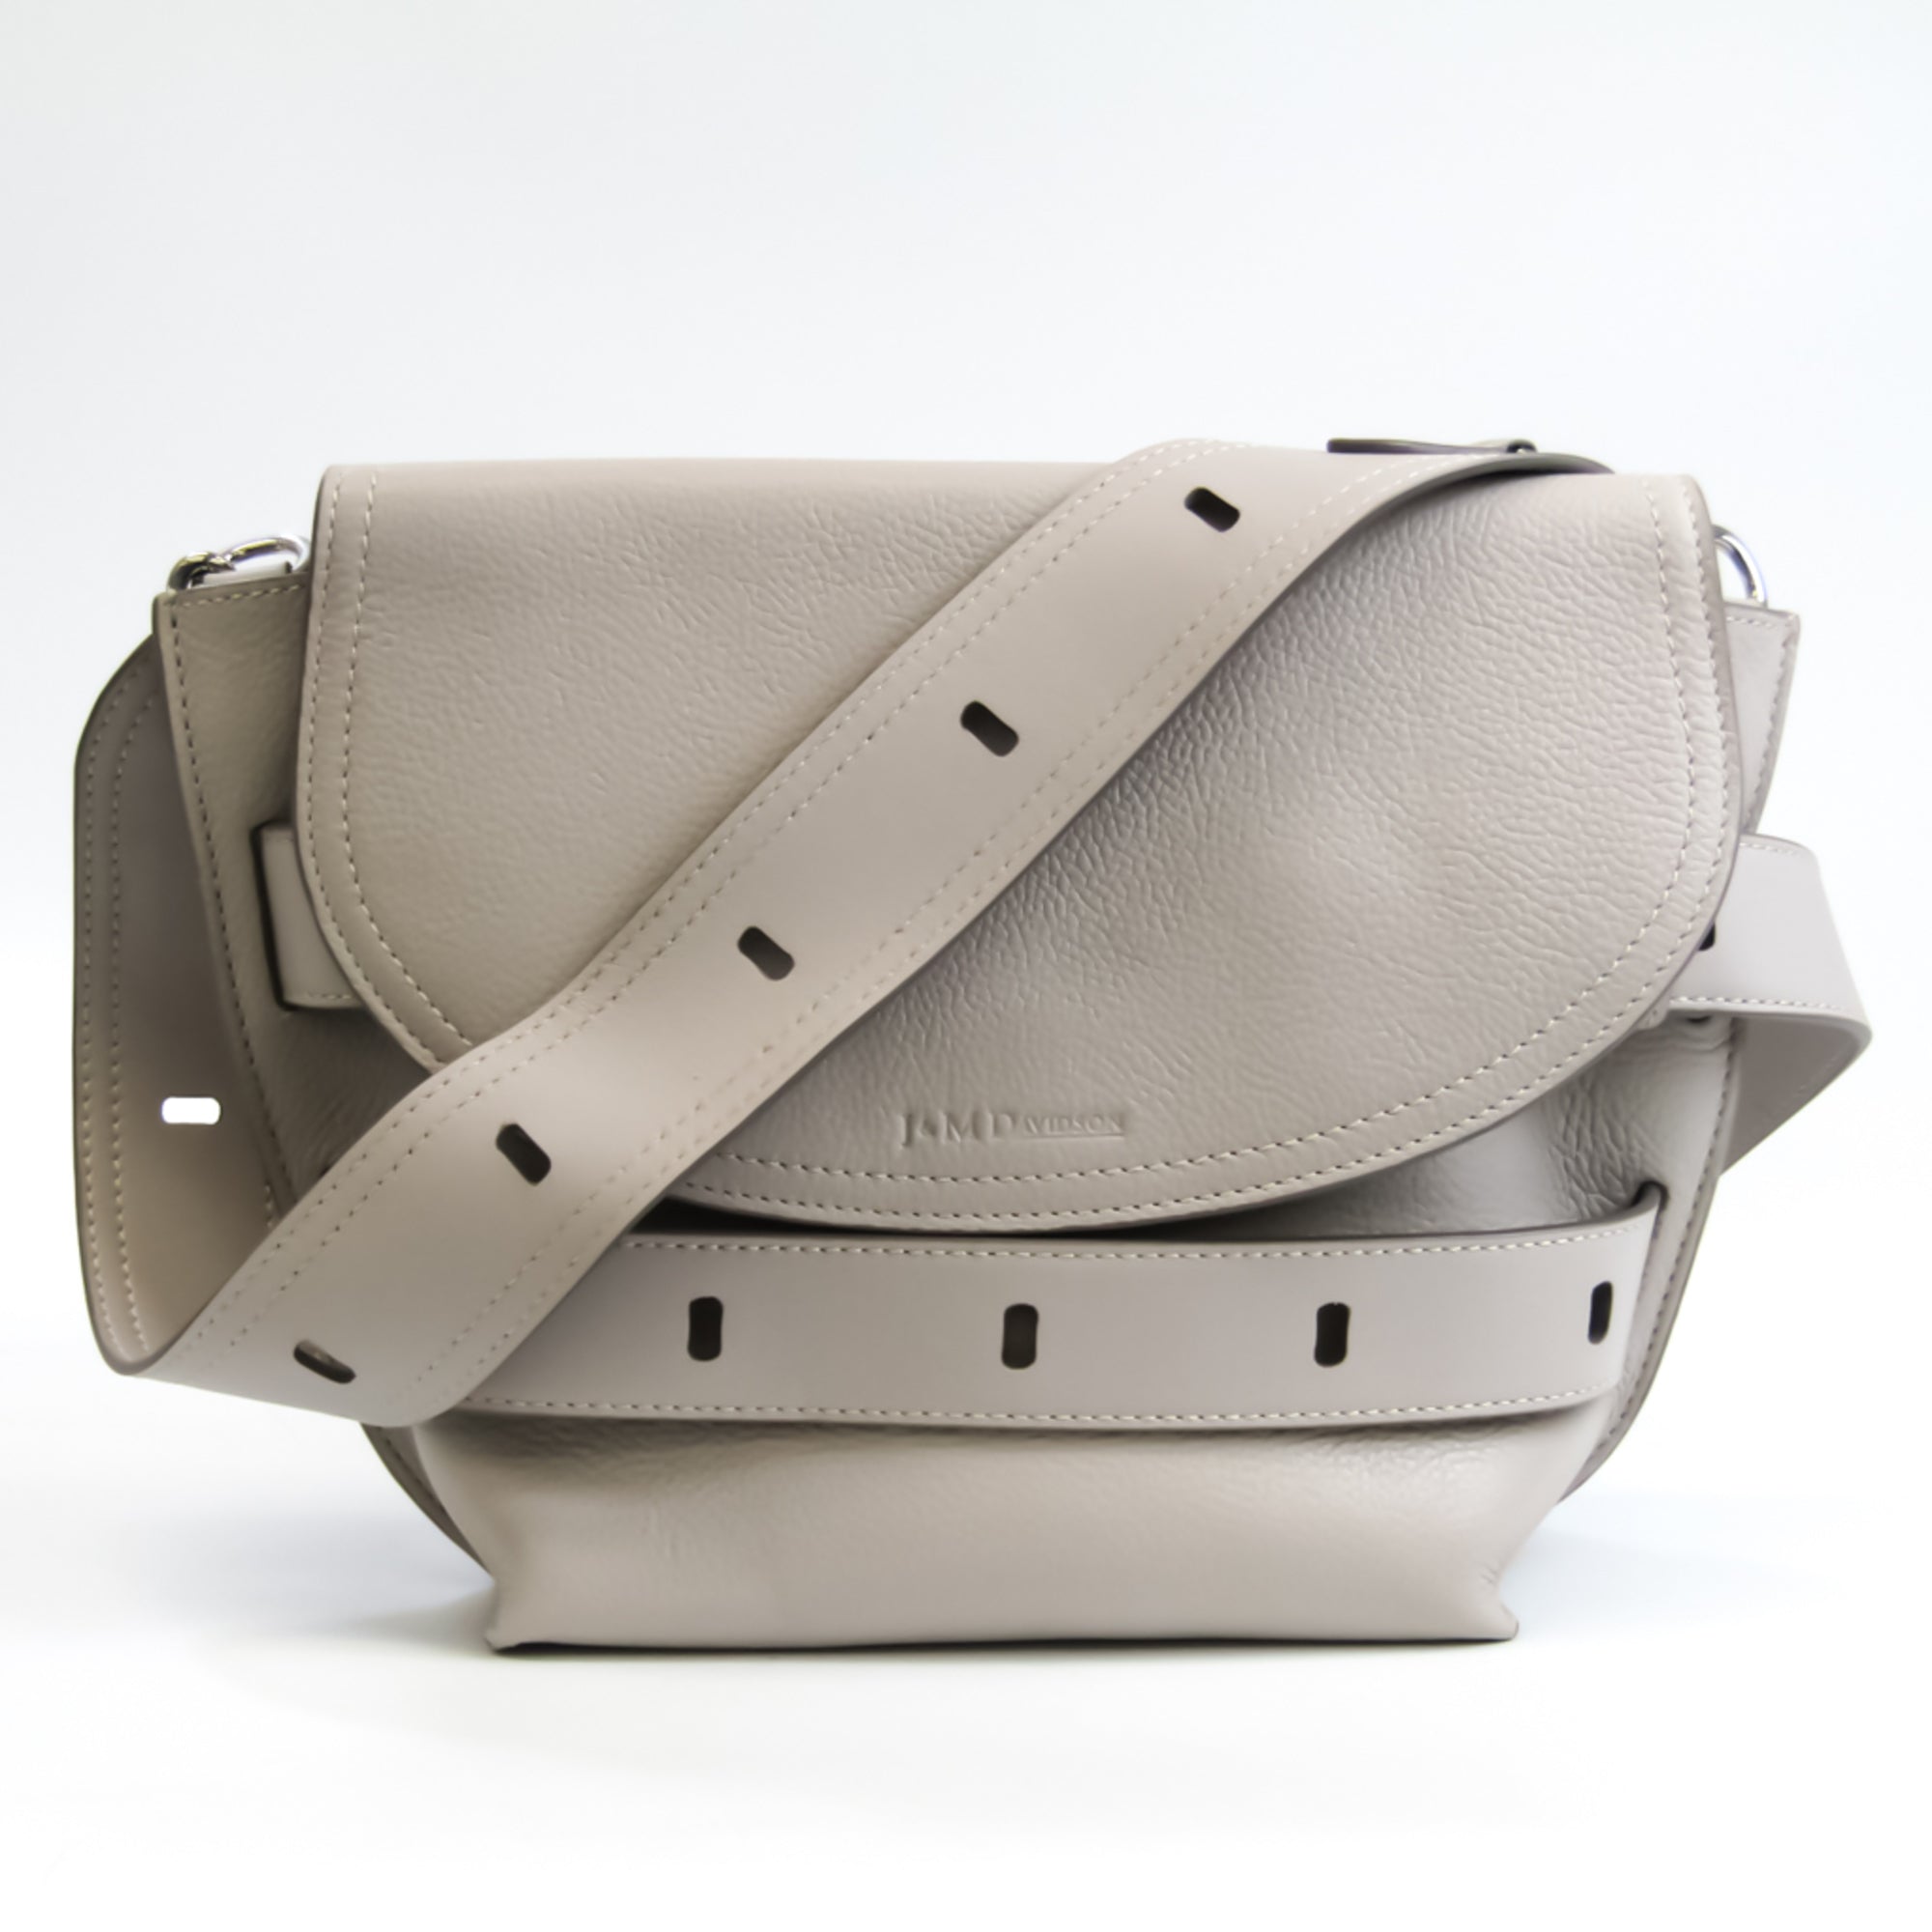 j&m davidson womens leather handbag ligth gray